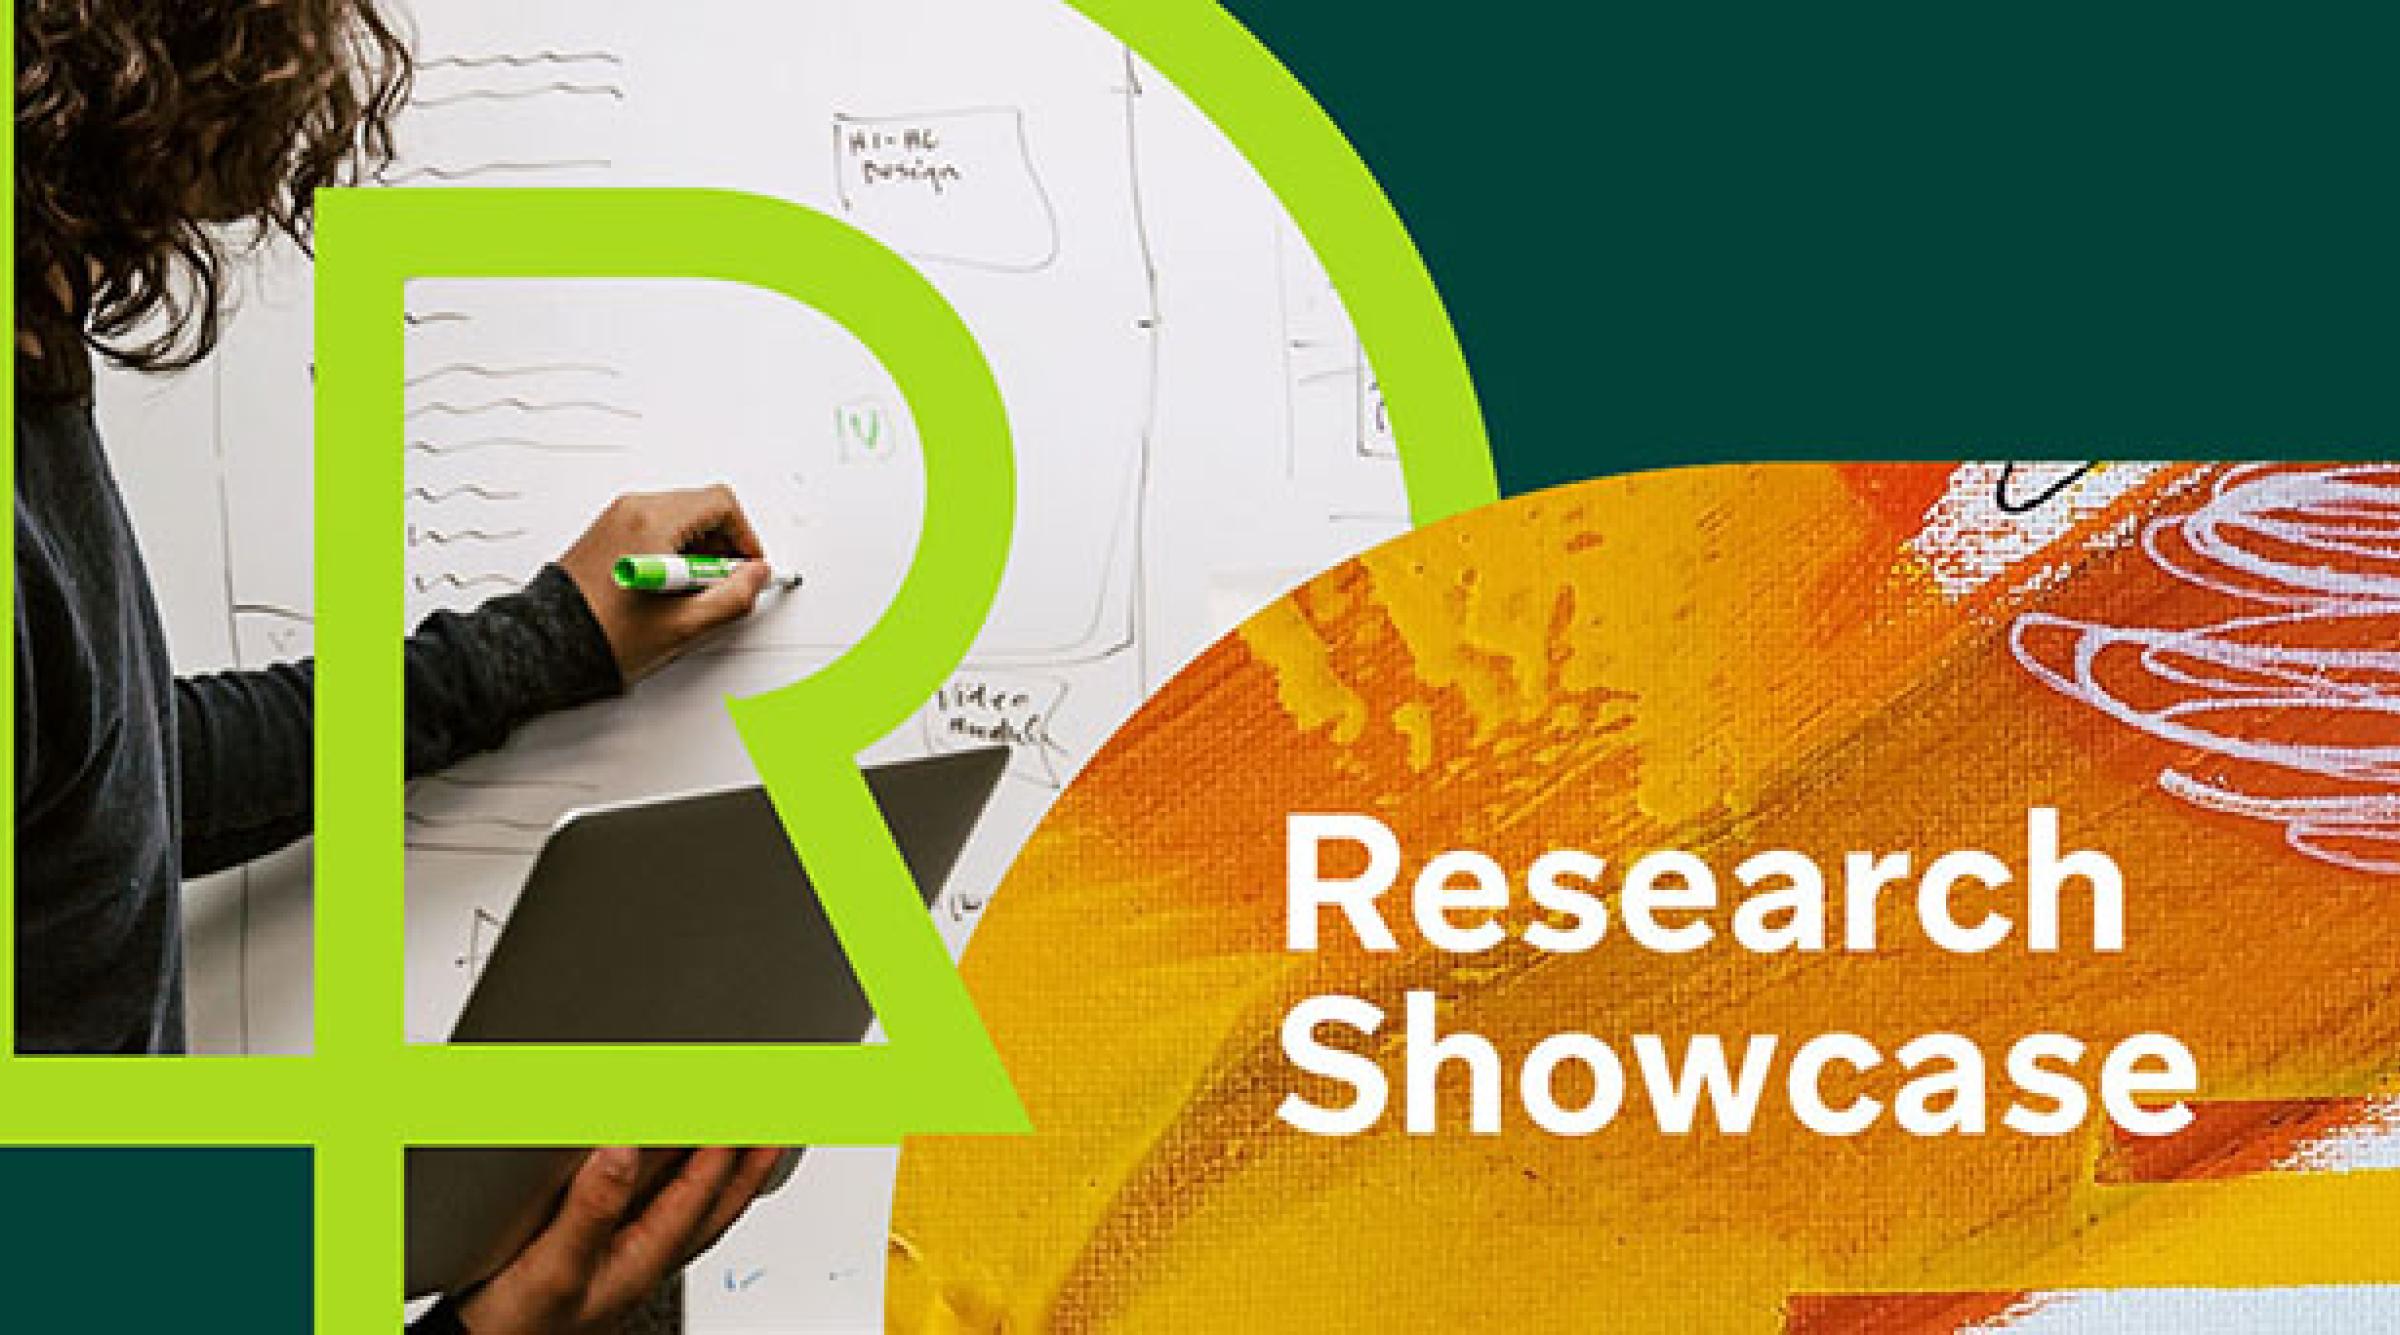 2nd annual RDP research showcase